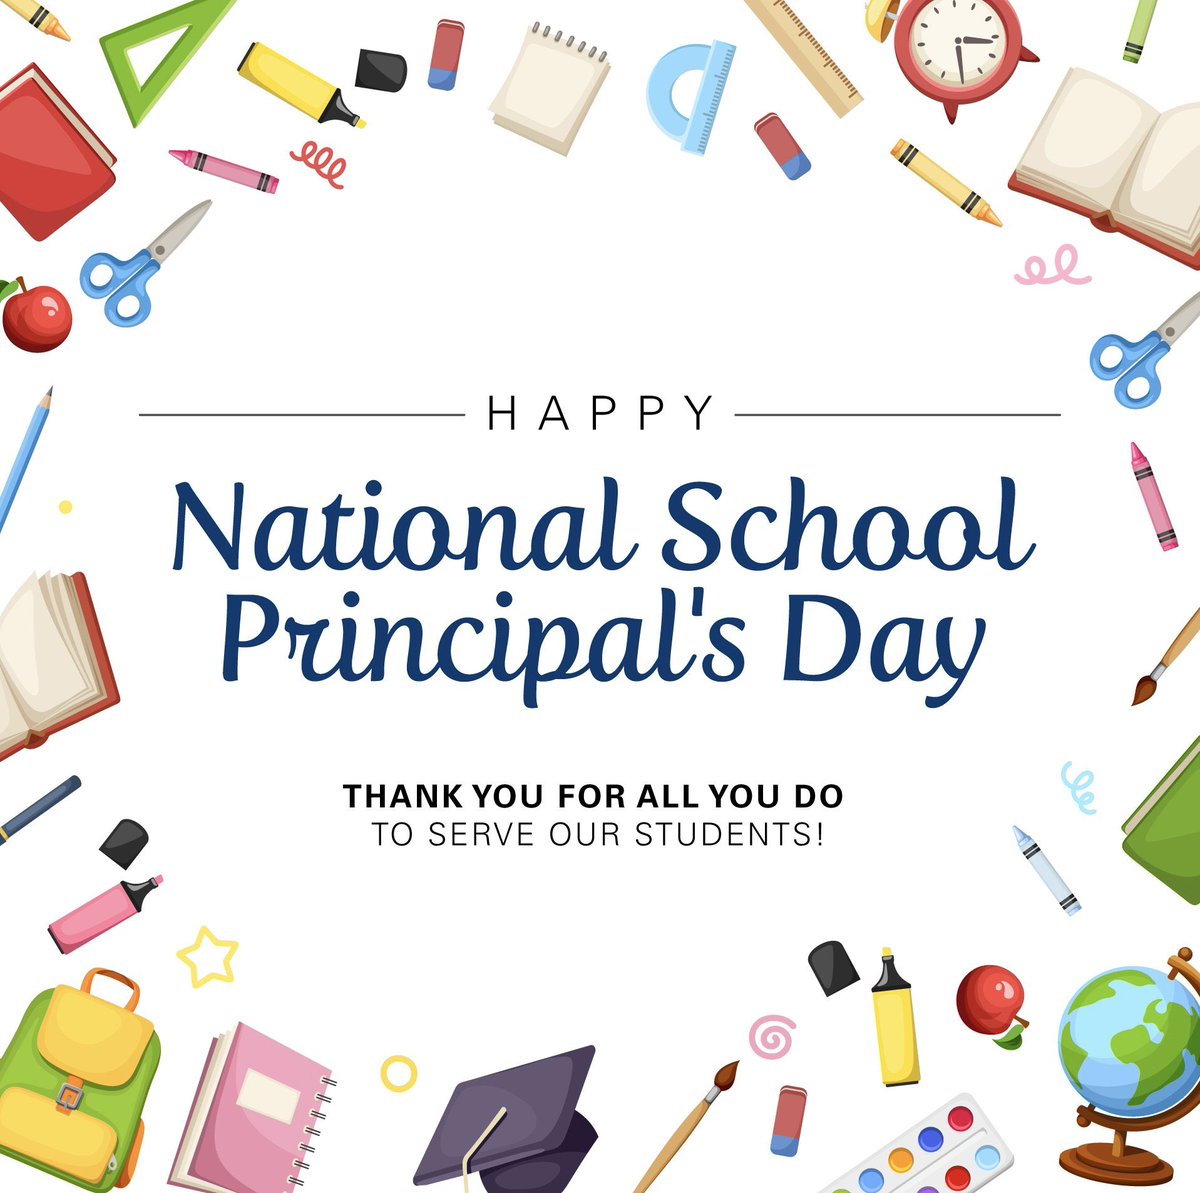 Happy National School Principals Day to our incredible D20 Leaders! @pretto_david @Russ_Lieberman @D20Attendance @Lucia_Medina3 @ruxdanika @DOEChancellor @FollowCSA @CSABKLYN